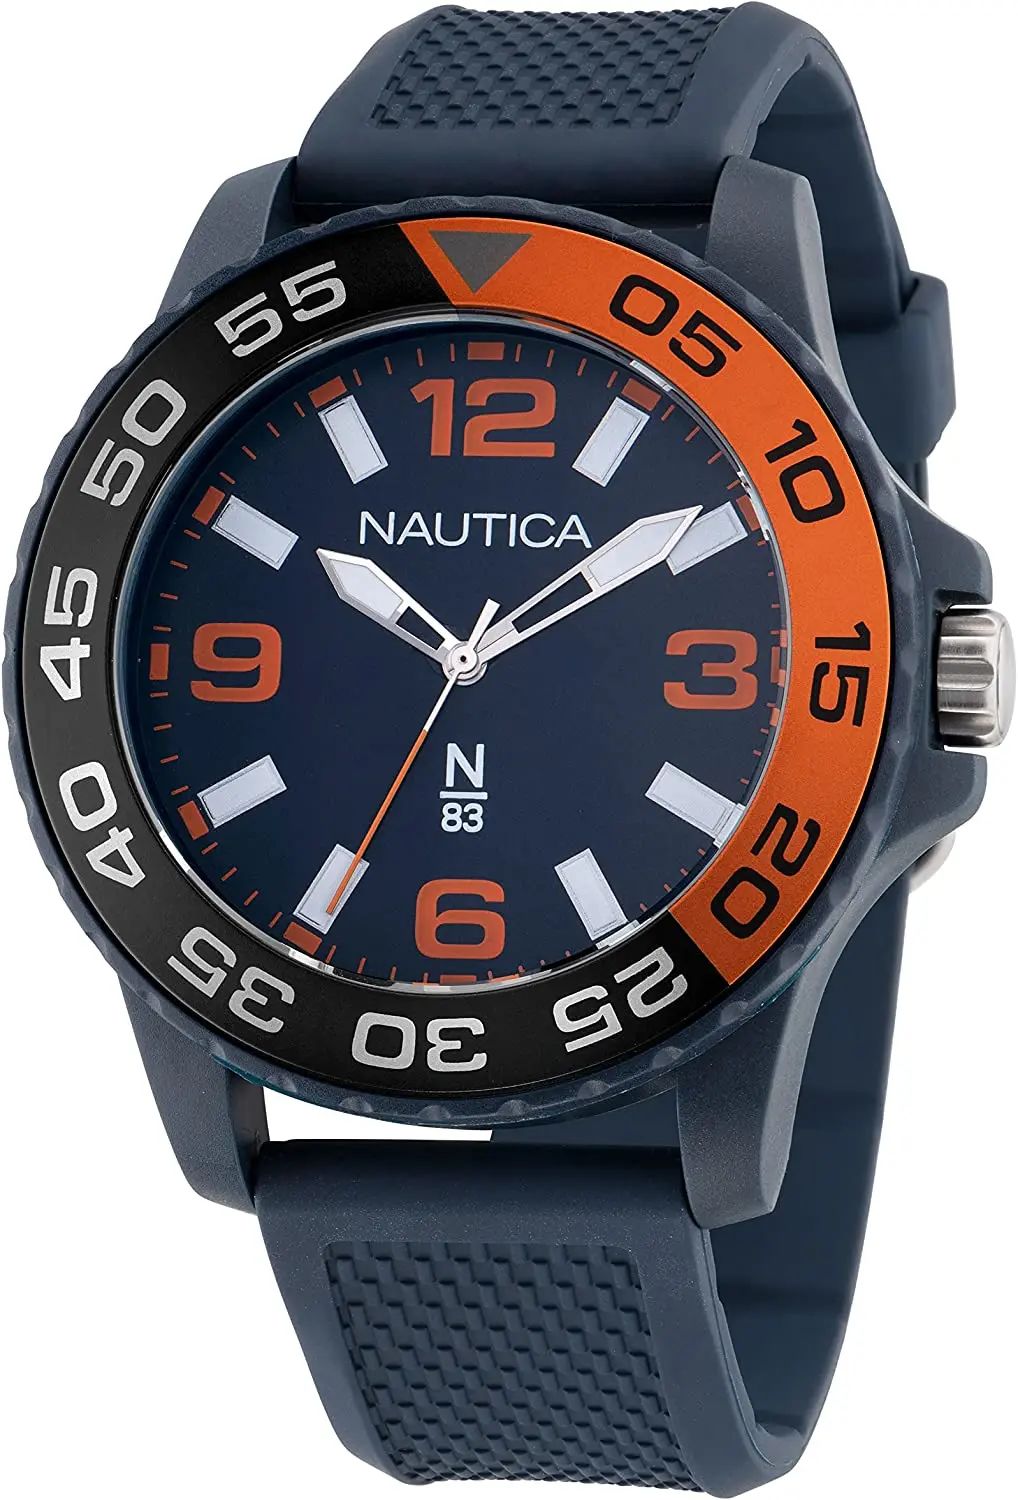 Nautica N83 Men's NAPFWS302 Finn World Blue Wheat PU Fiber Strap Watch